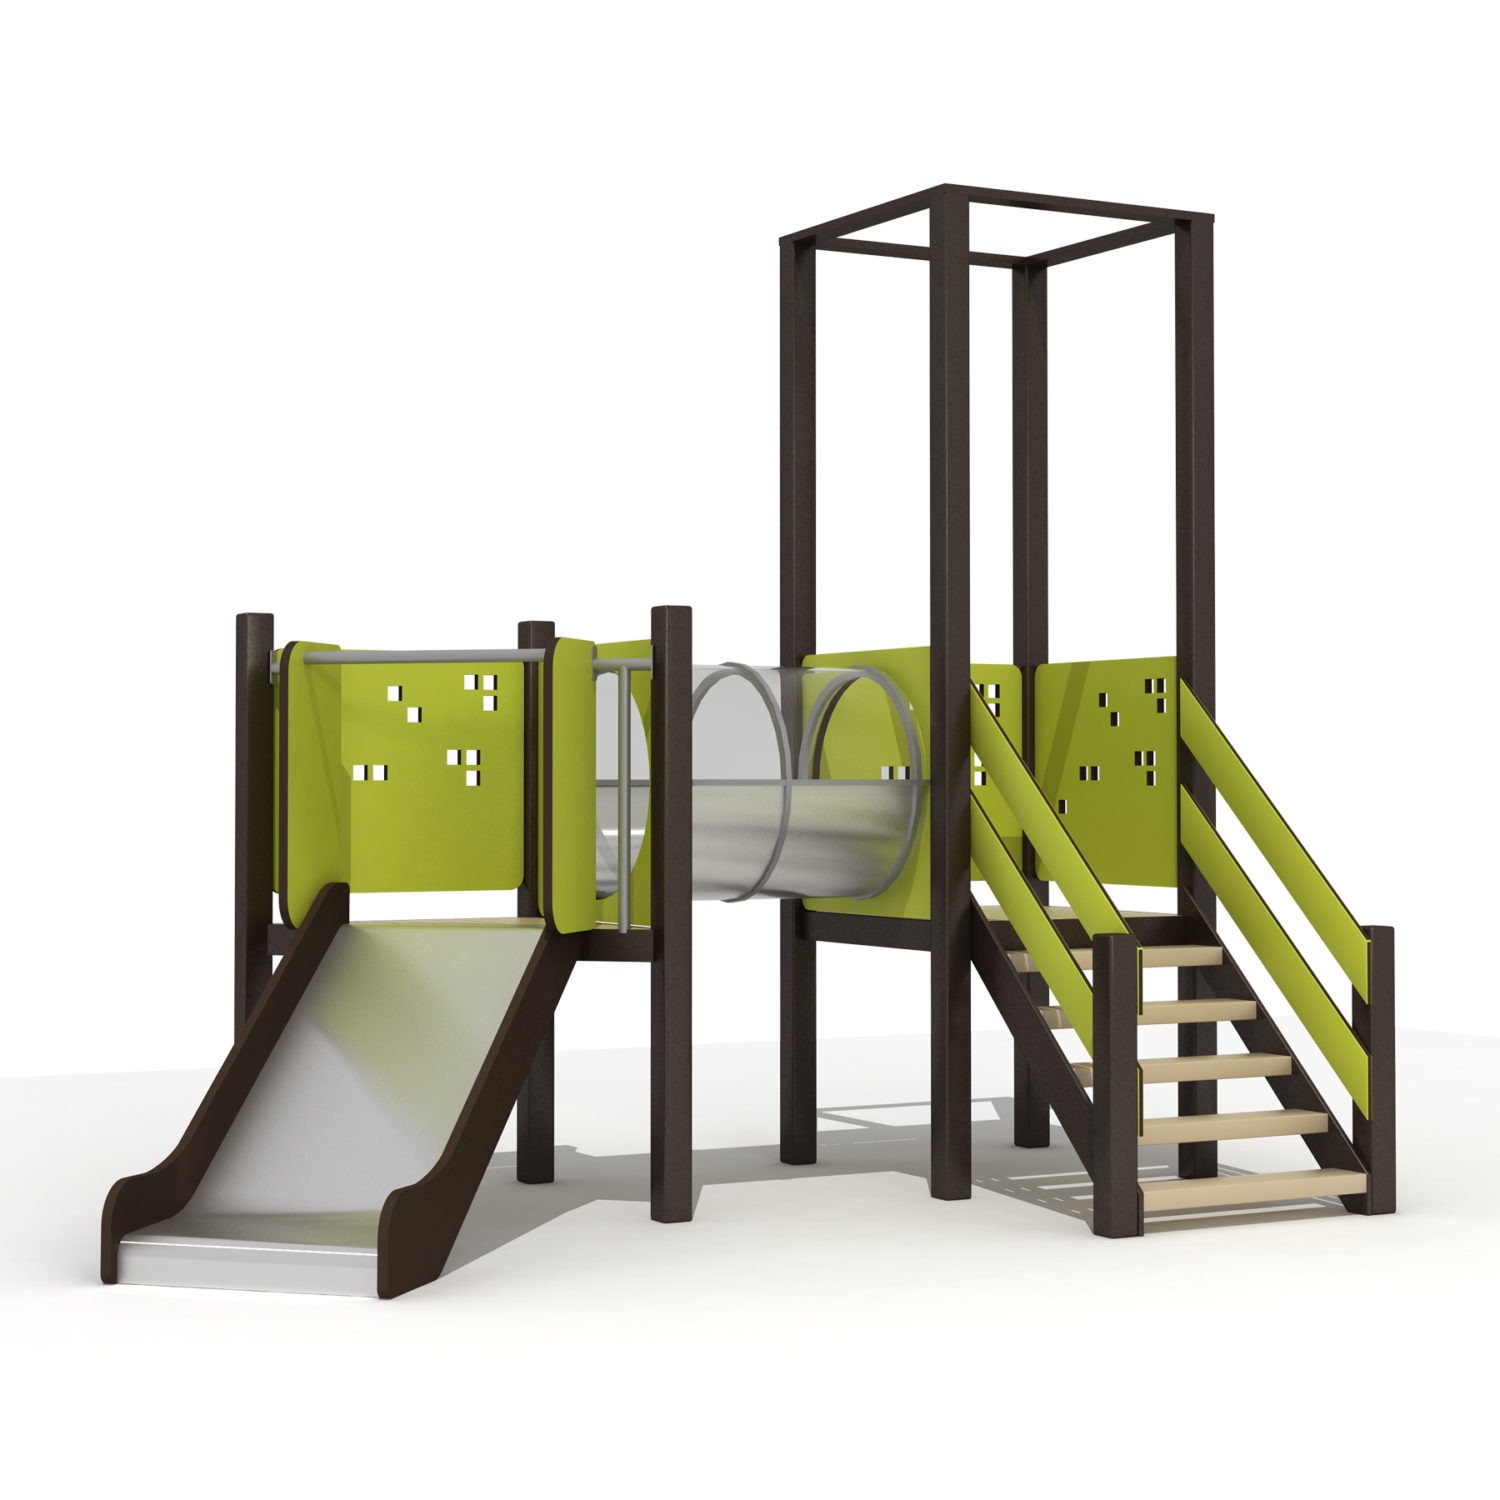 Wood Playground S1806 : สนามเด็กเล่นสไลด์เดอร์ ลอดอุโมงค์ PRICE LEMON TREE